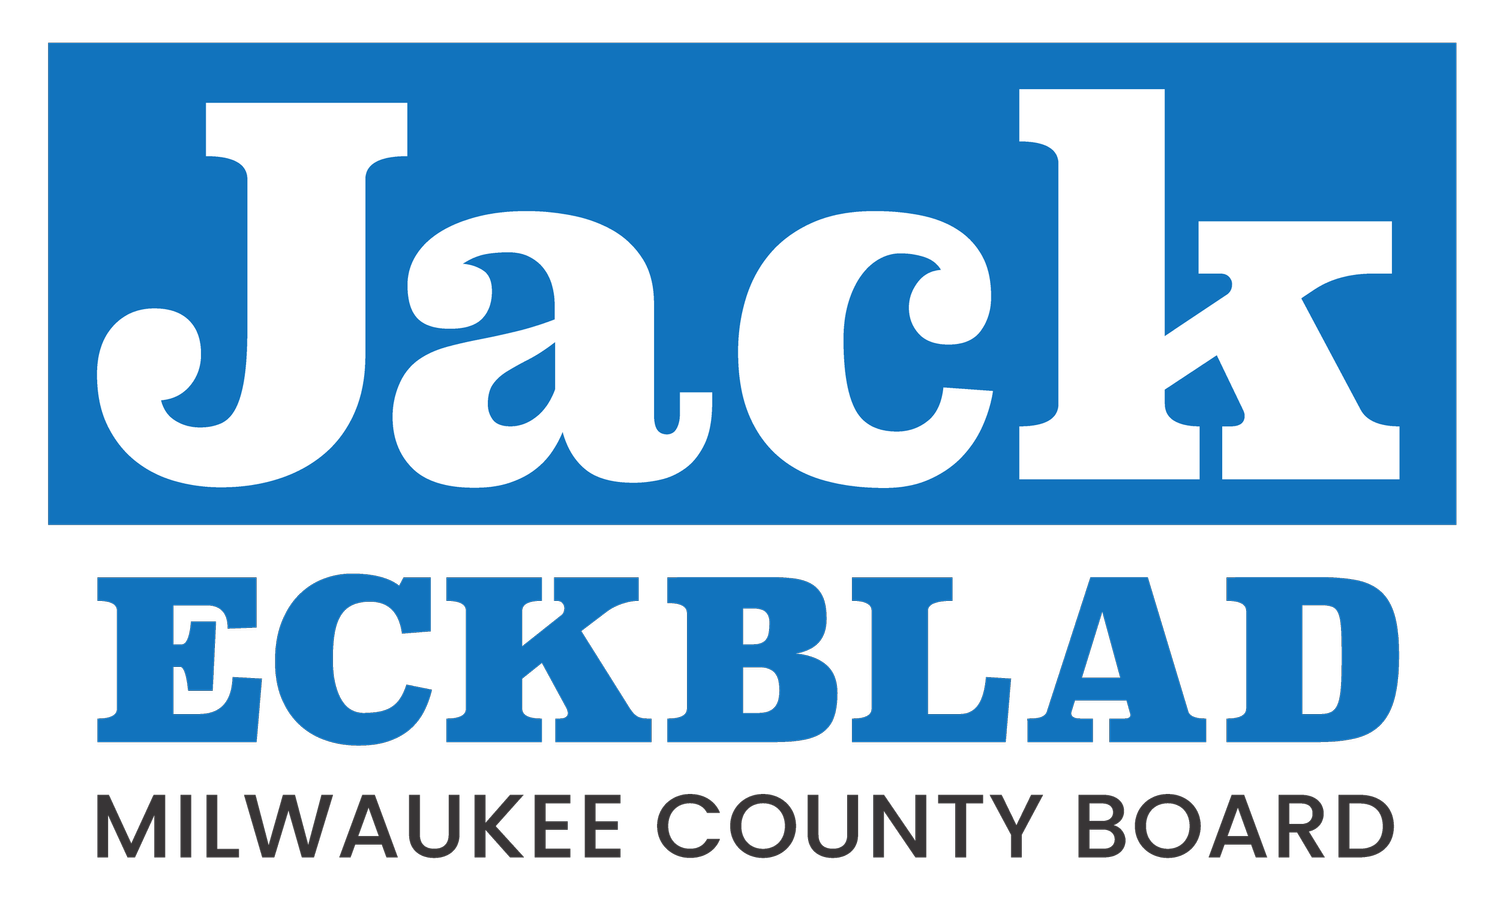 Jack Eckblad for Milwaukee County Board